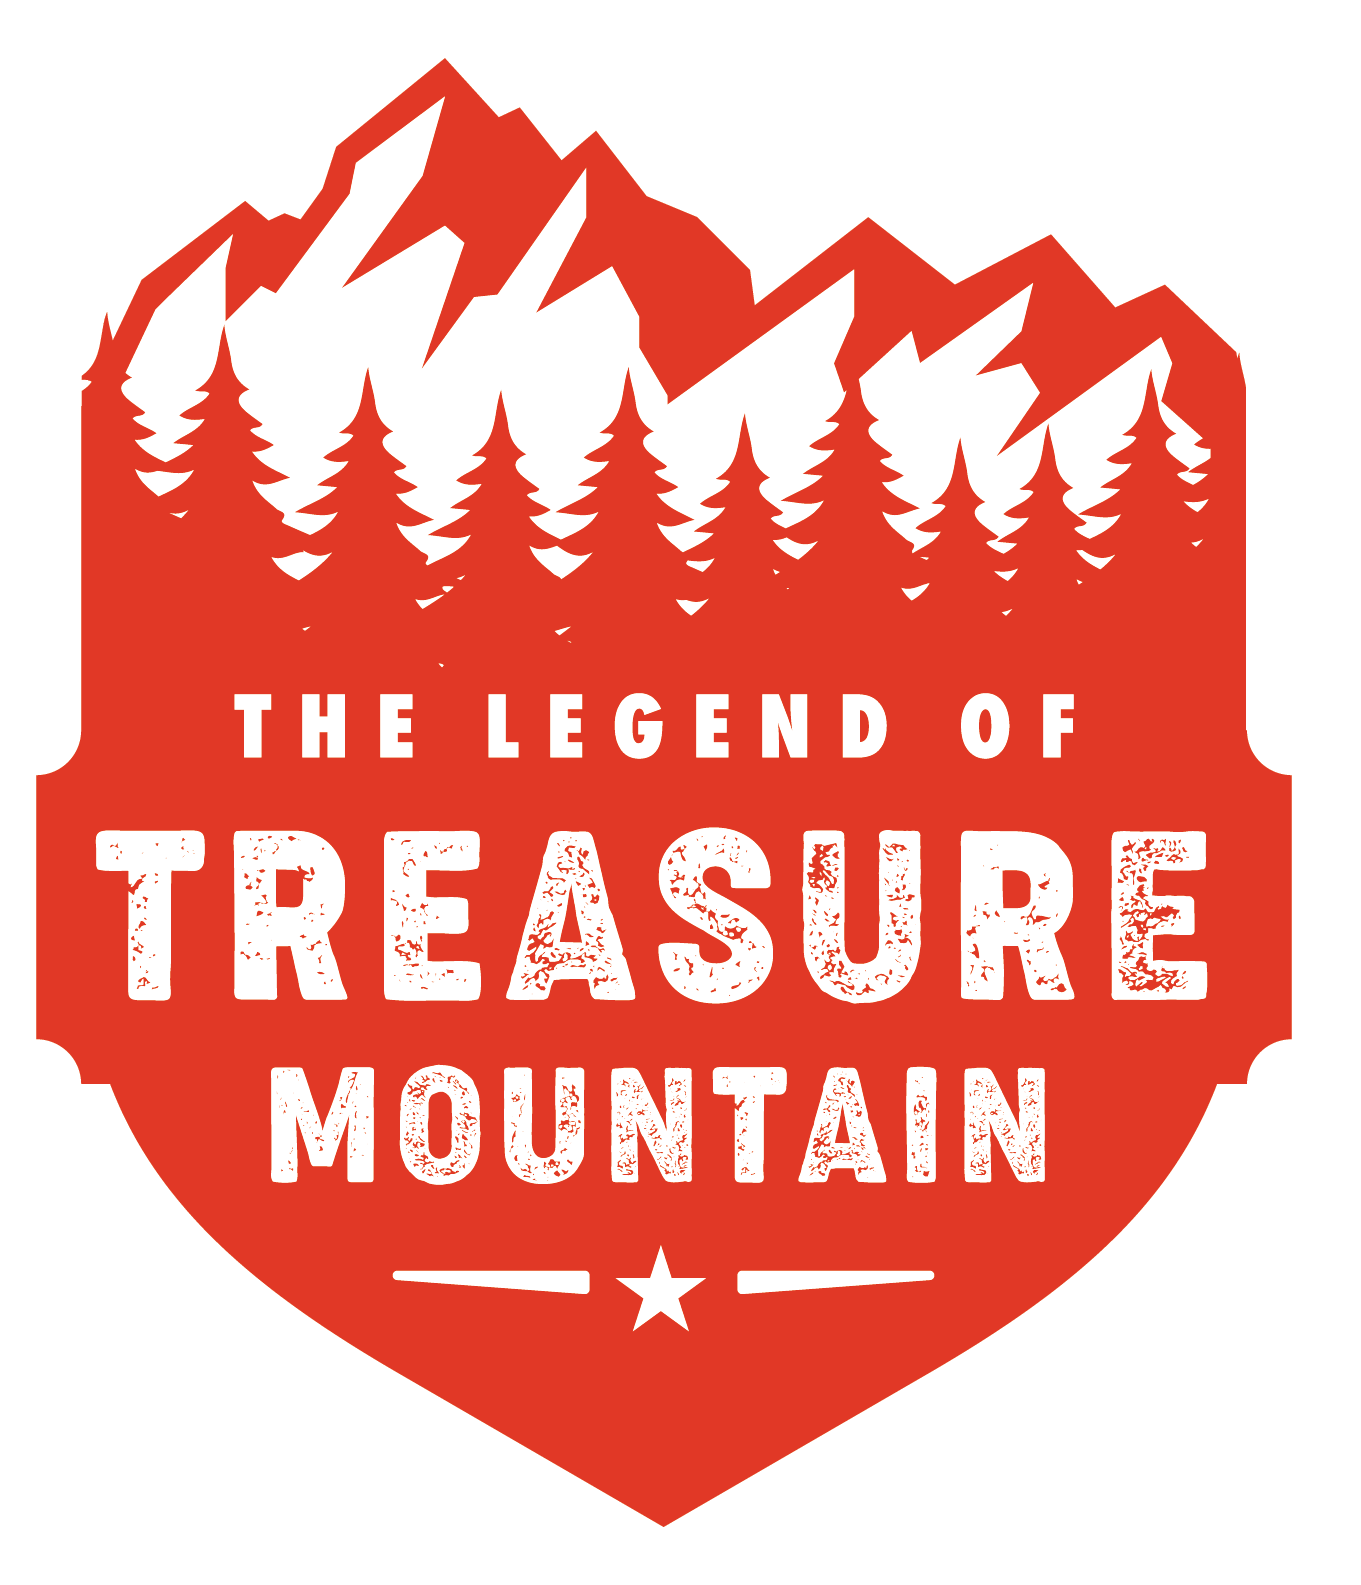 Treasure Mountain